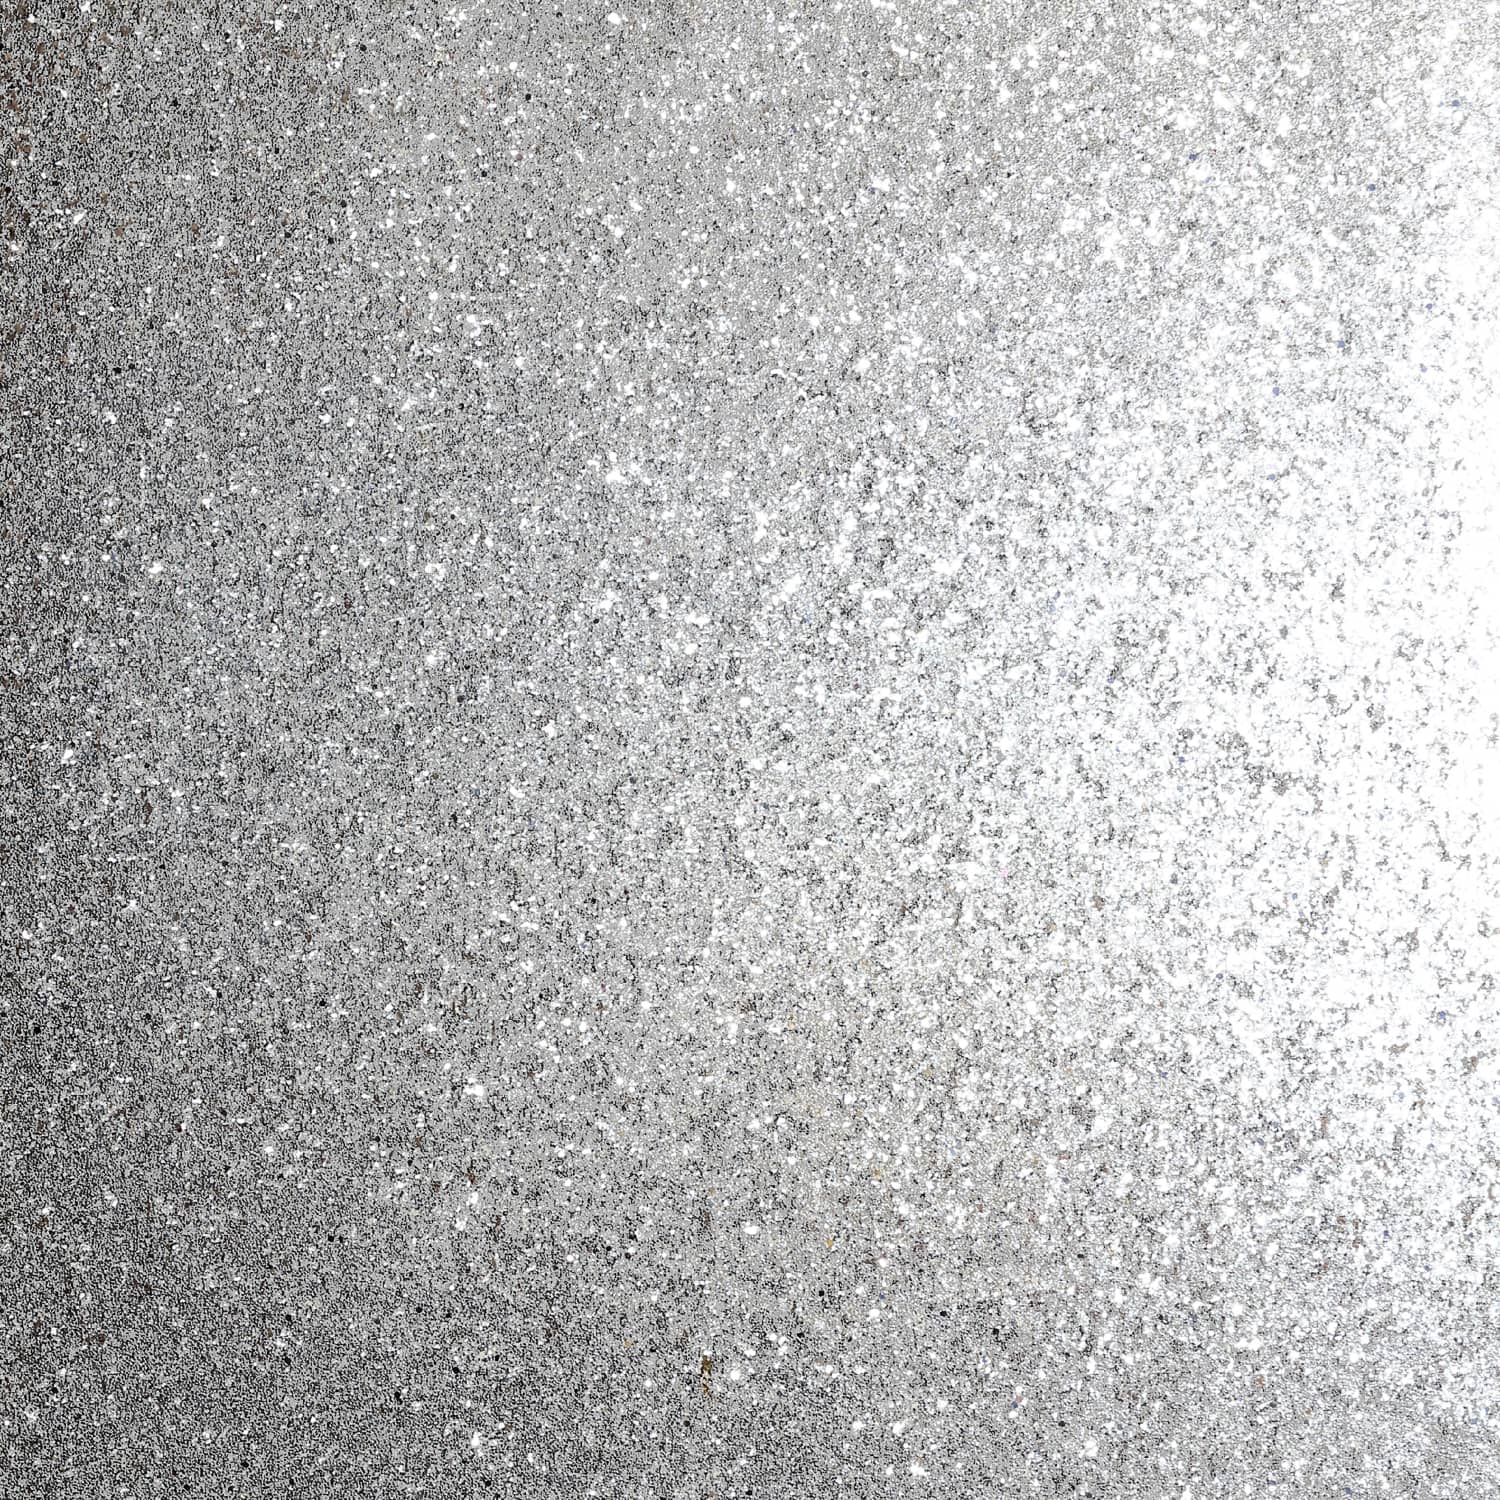 Sequin Sparkle Silver Wallpaper - Sequin Sparkle Silver , HD Wallpaper & Backgrounds